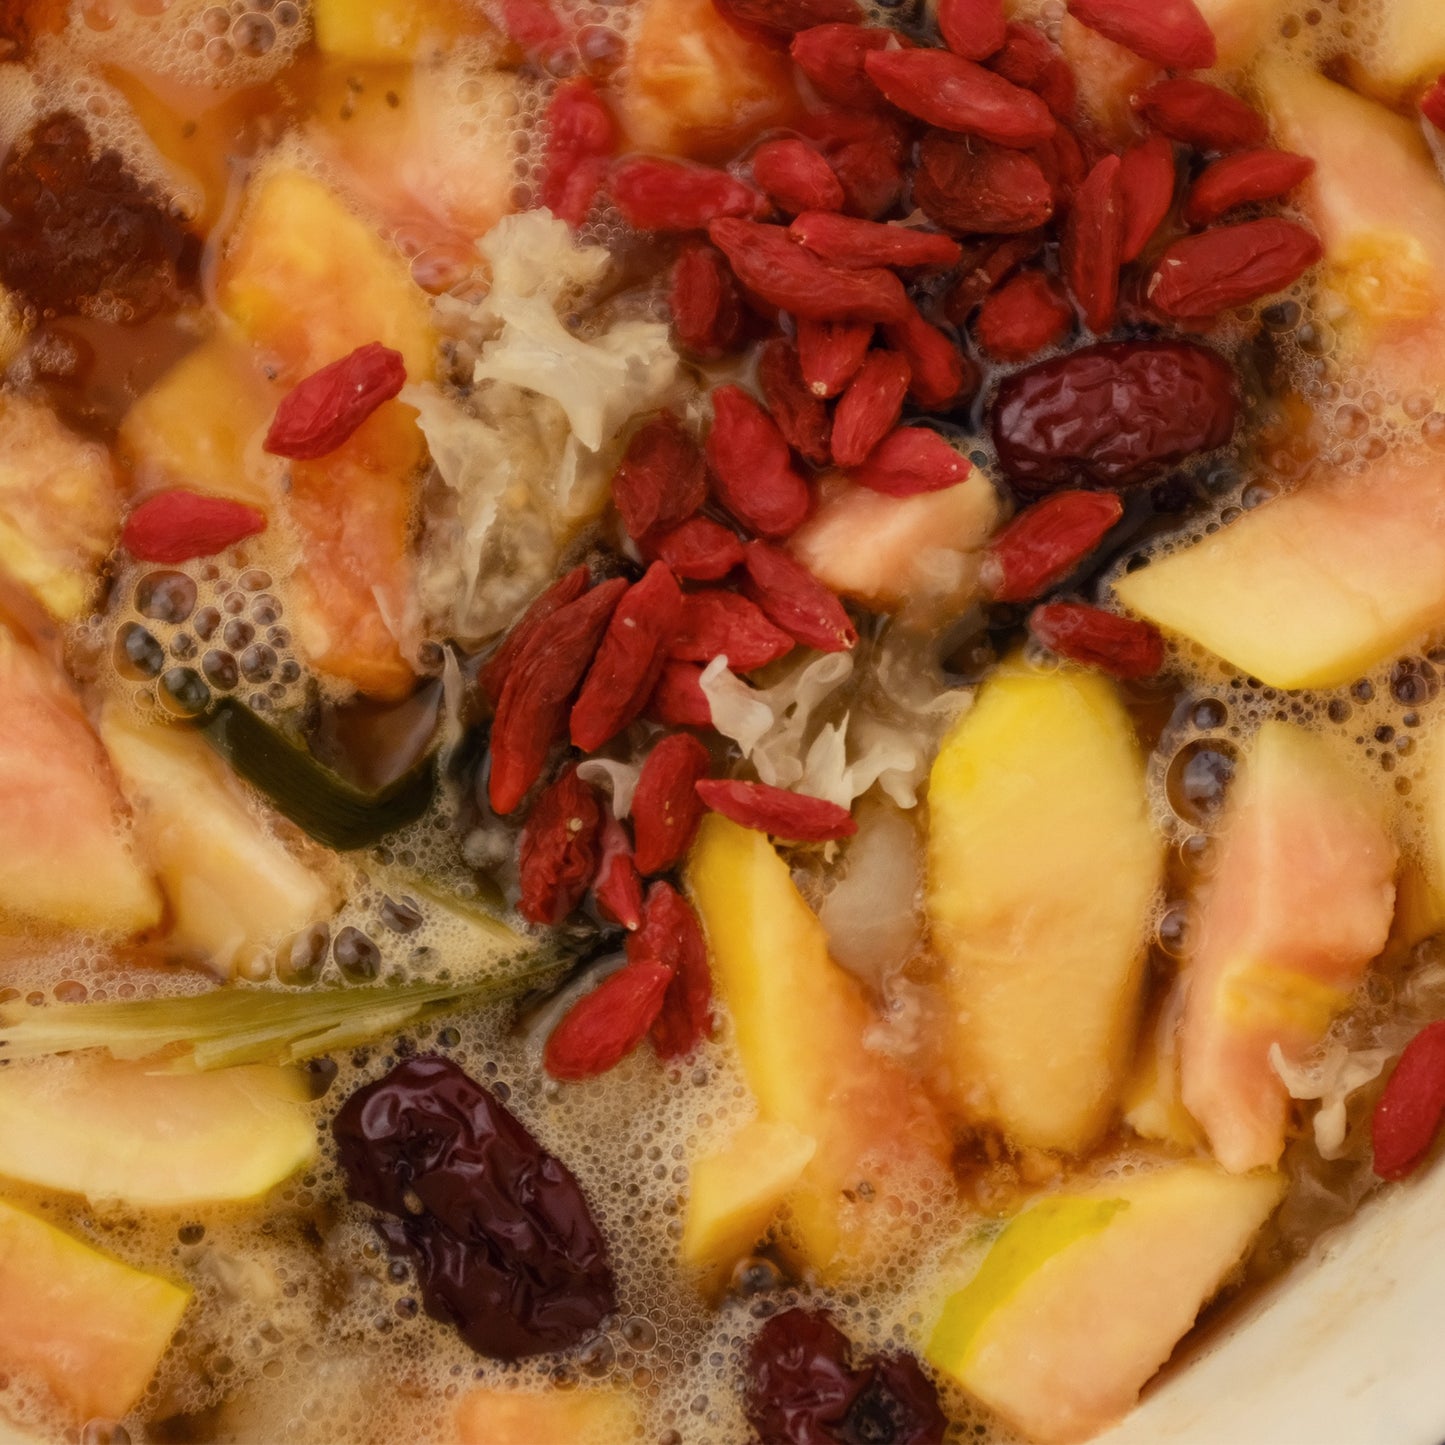 herbal dessert consisting of goji berries, papaya, red dates jujube, snow fungus, peach gum